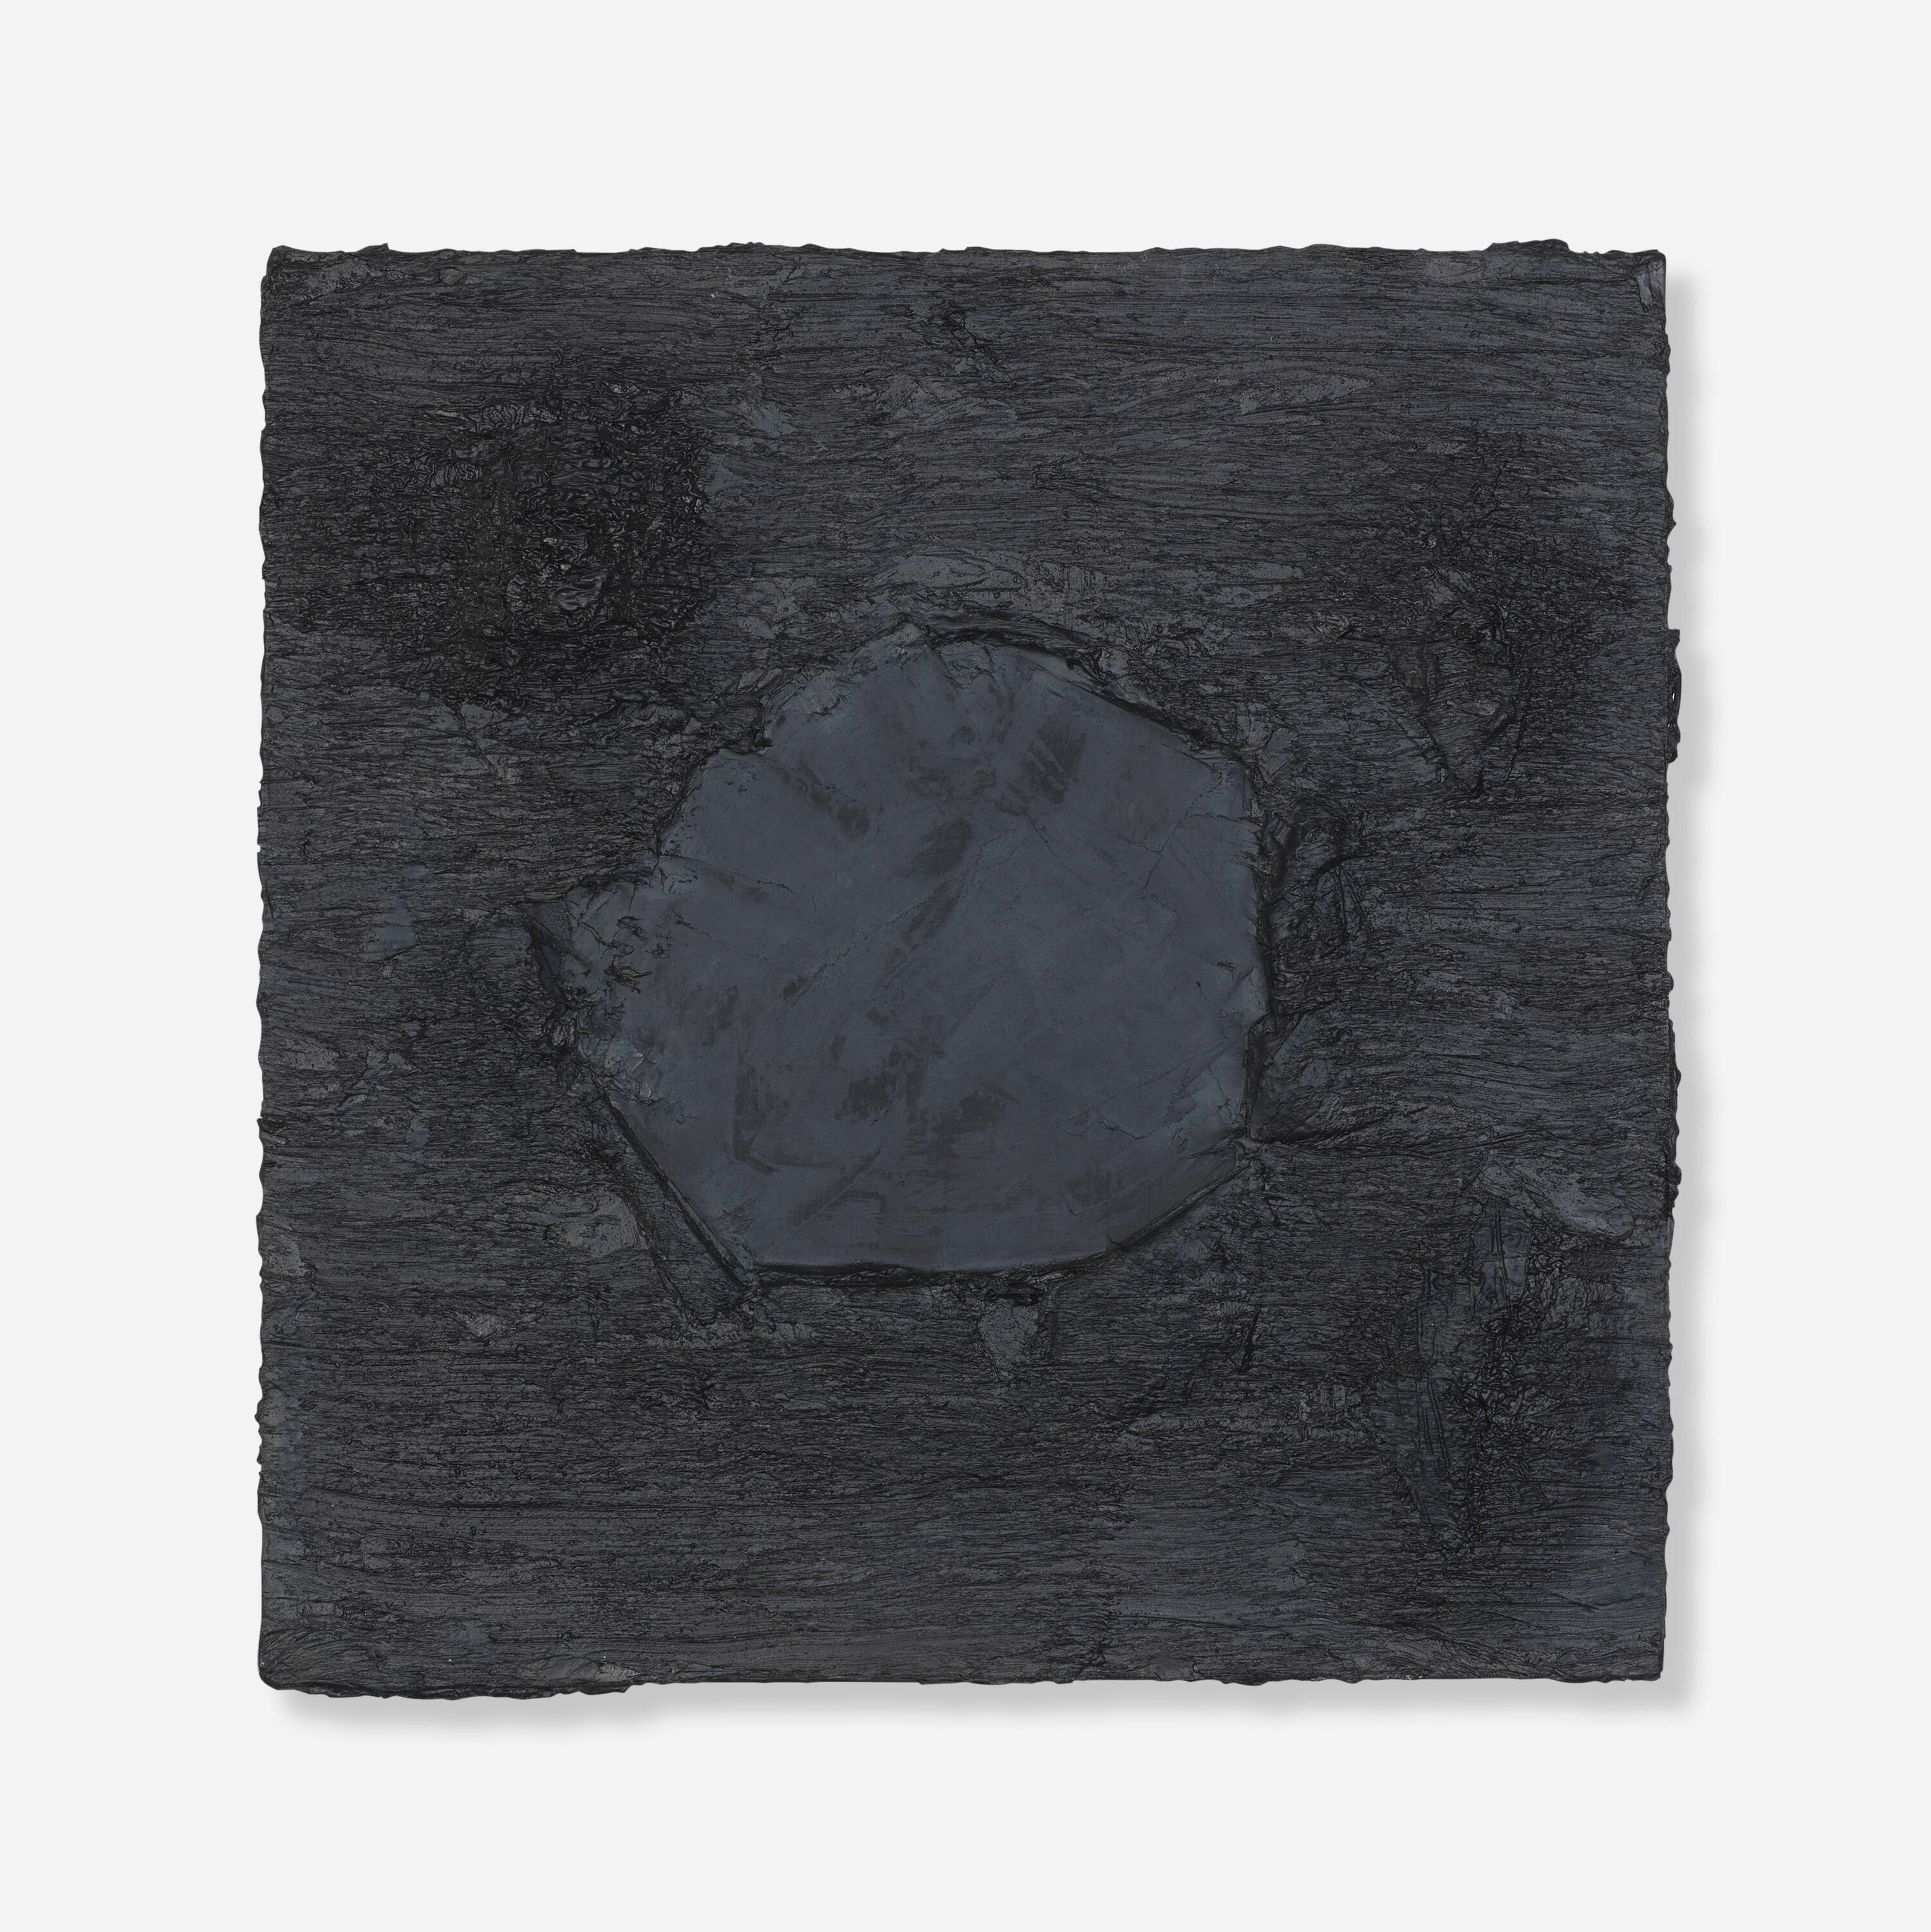 Monochrome Painting Black #1 by Jason Pickleman, 2001